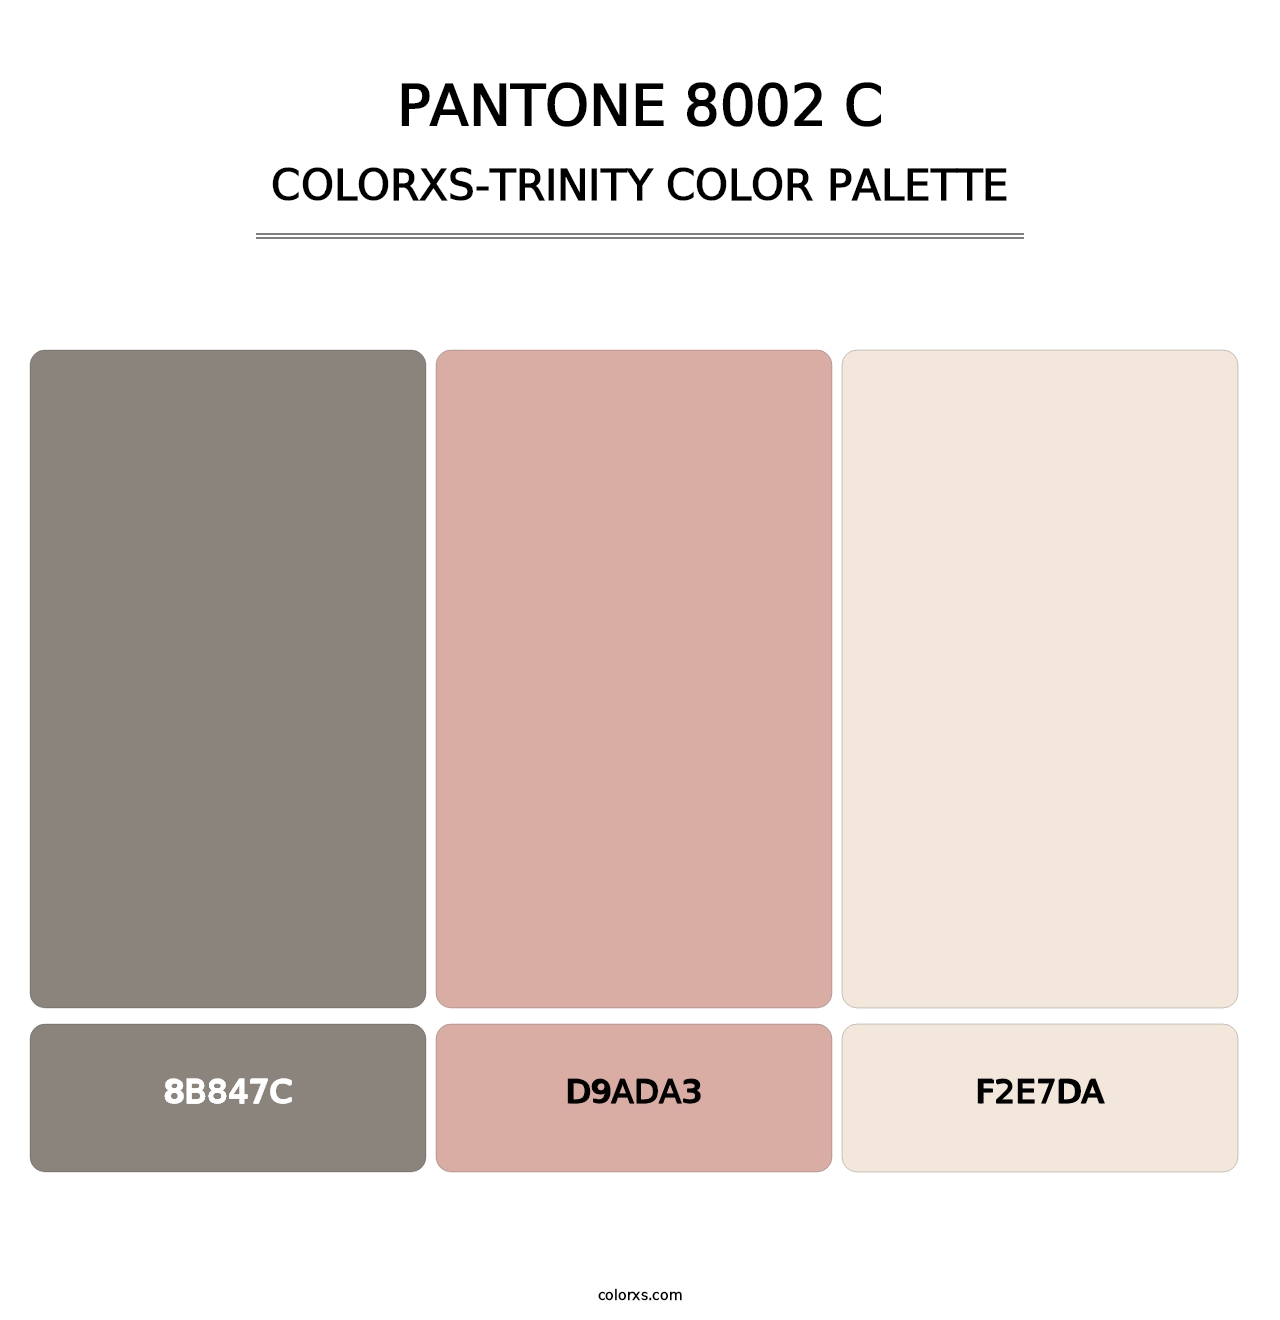 PANTONE 8002 C - Colorxs Trinity Palette